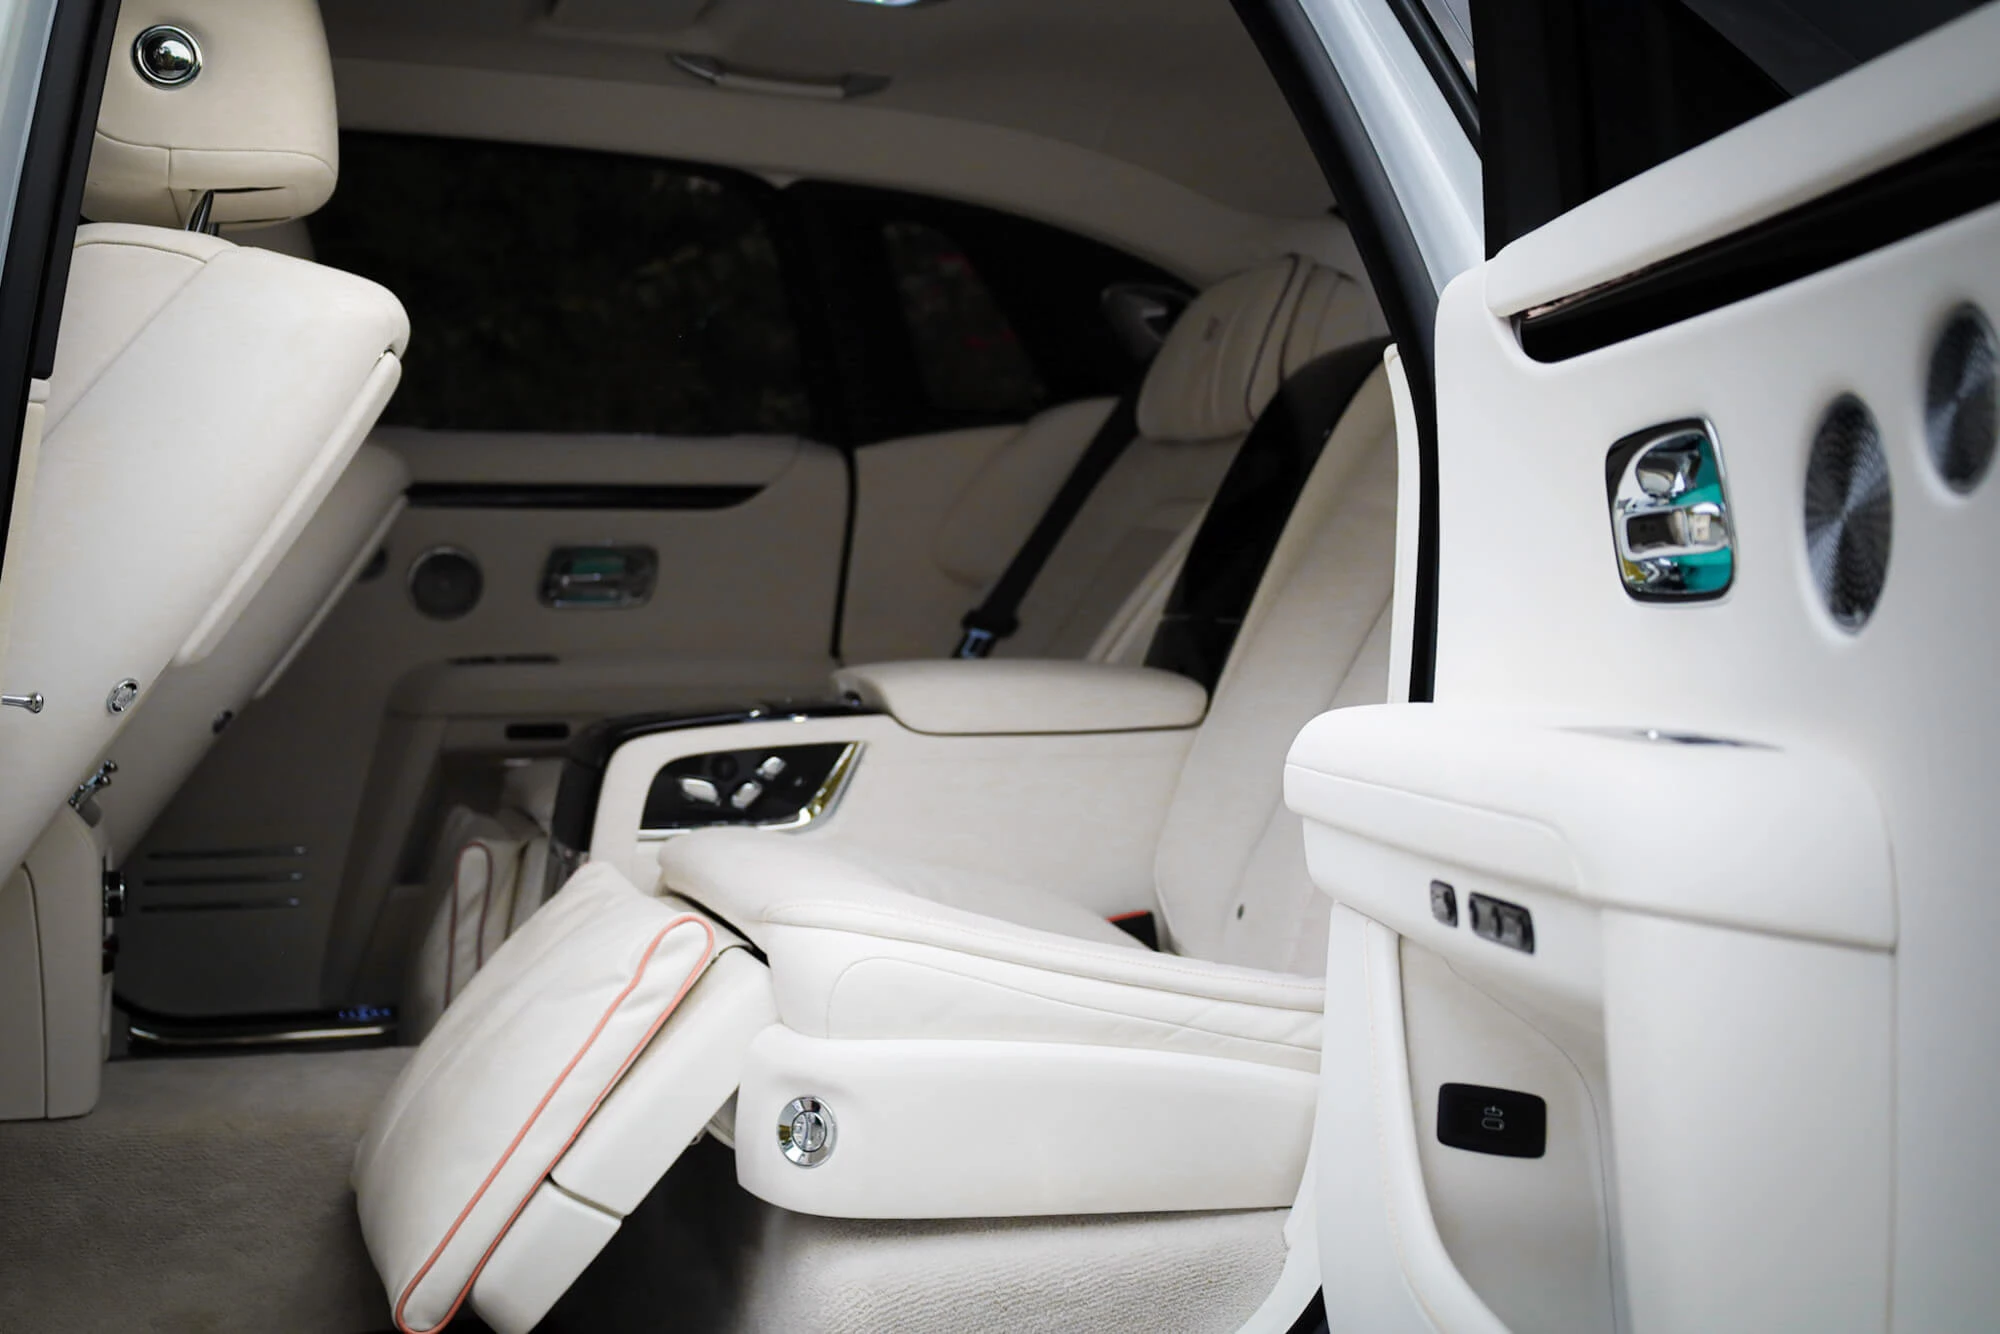 Rolls-Royce Ghost White